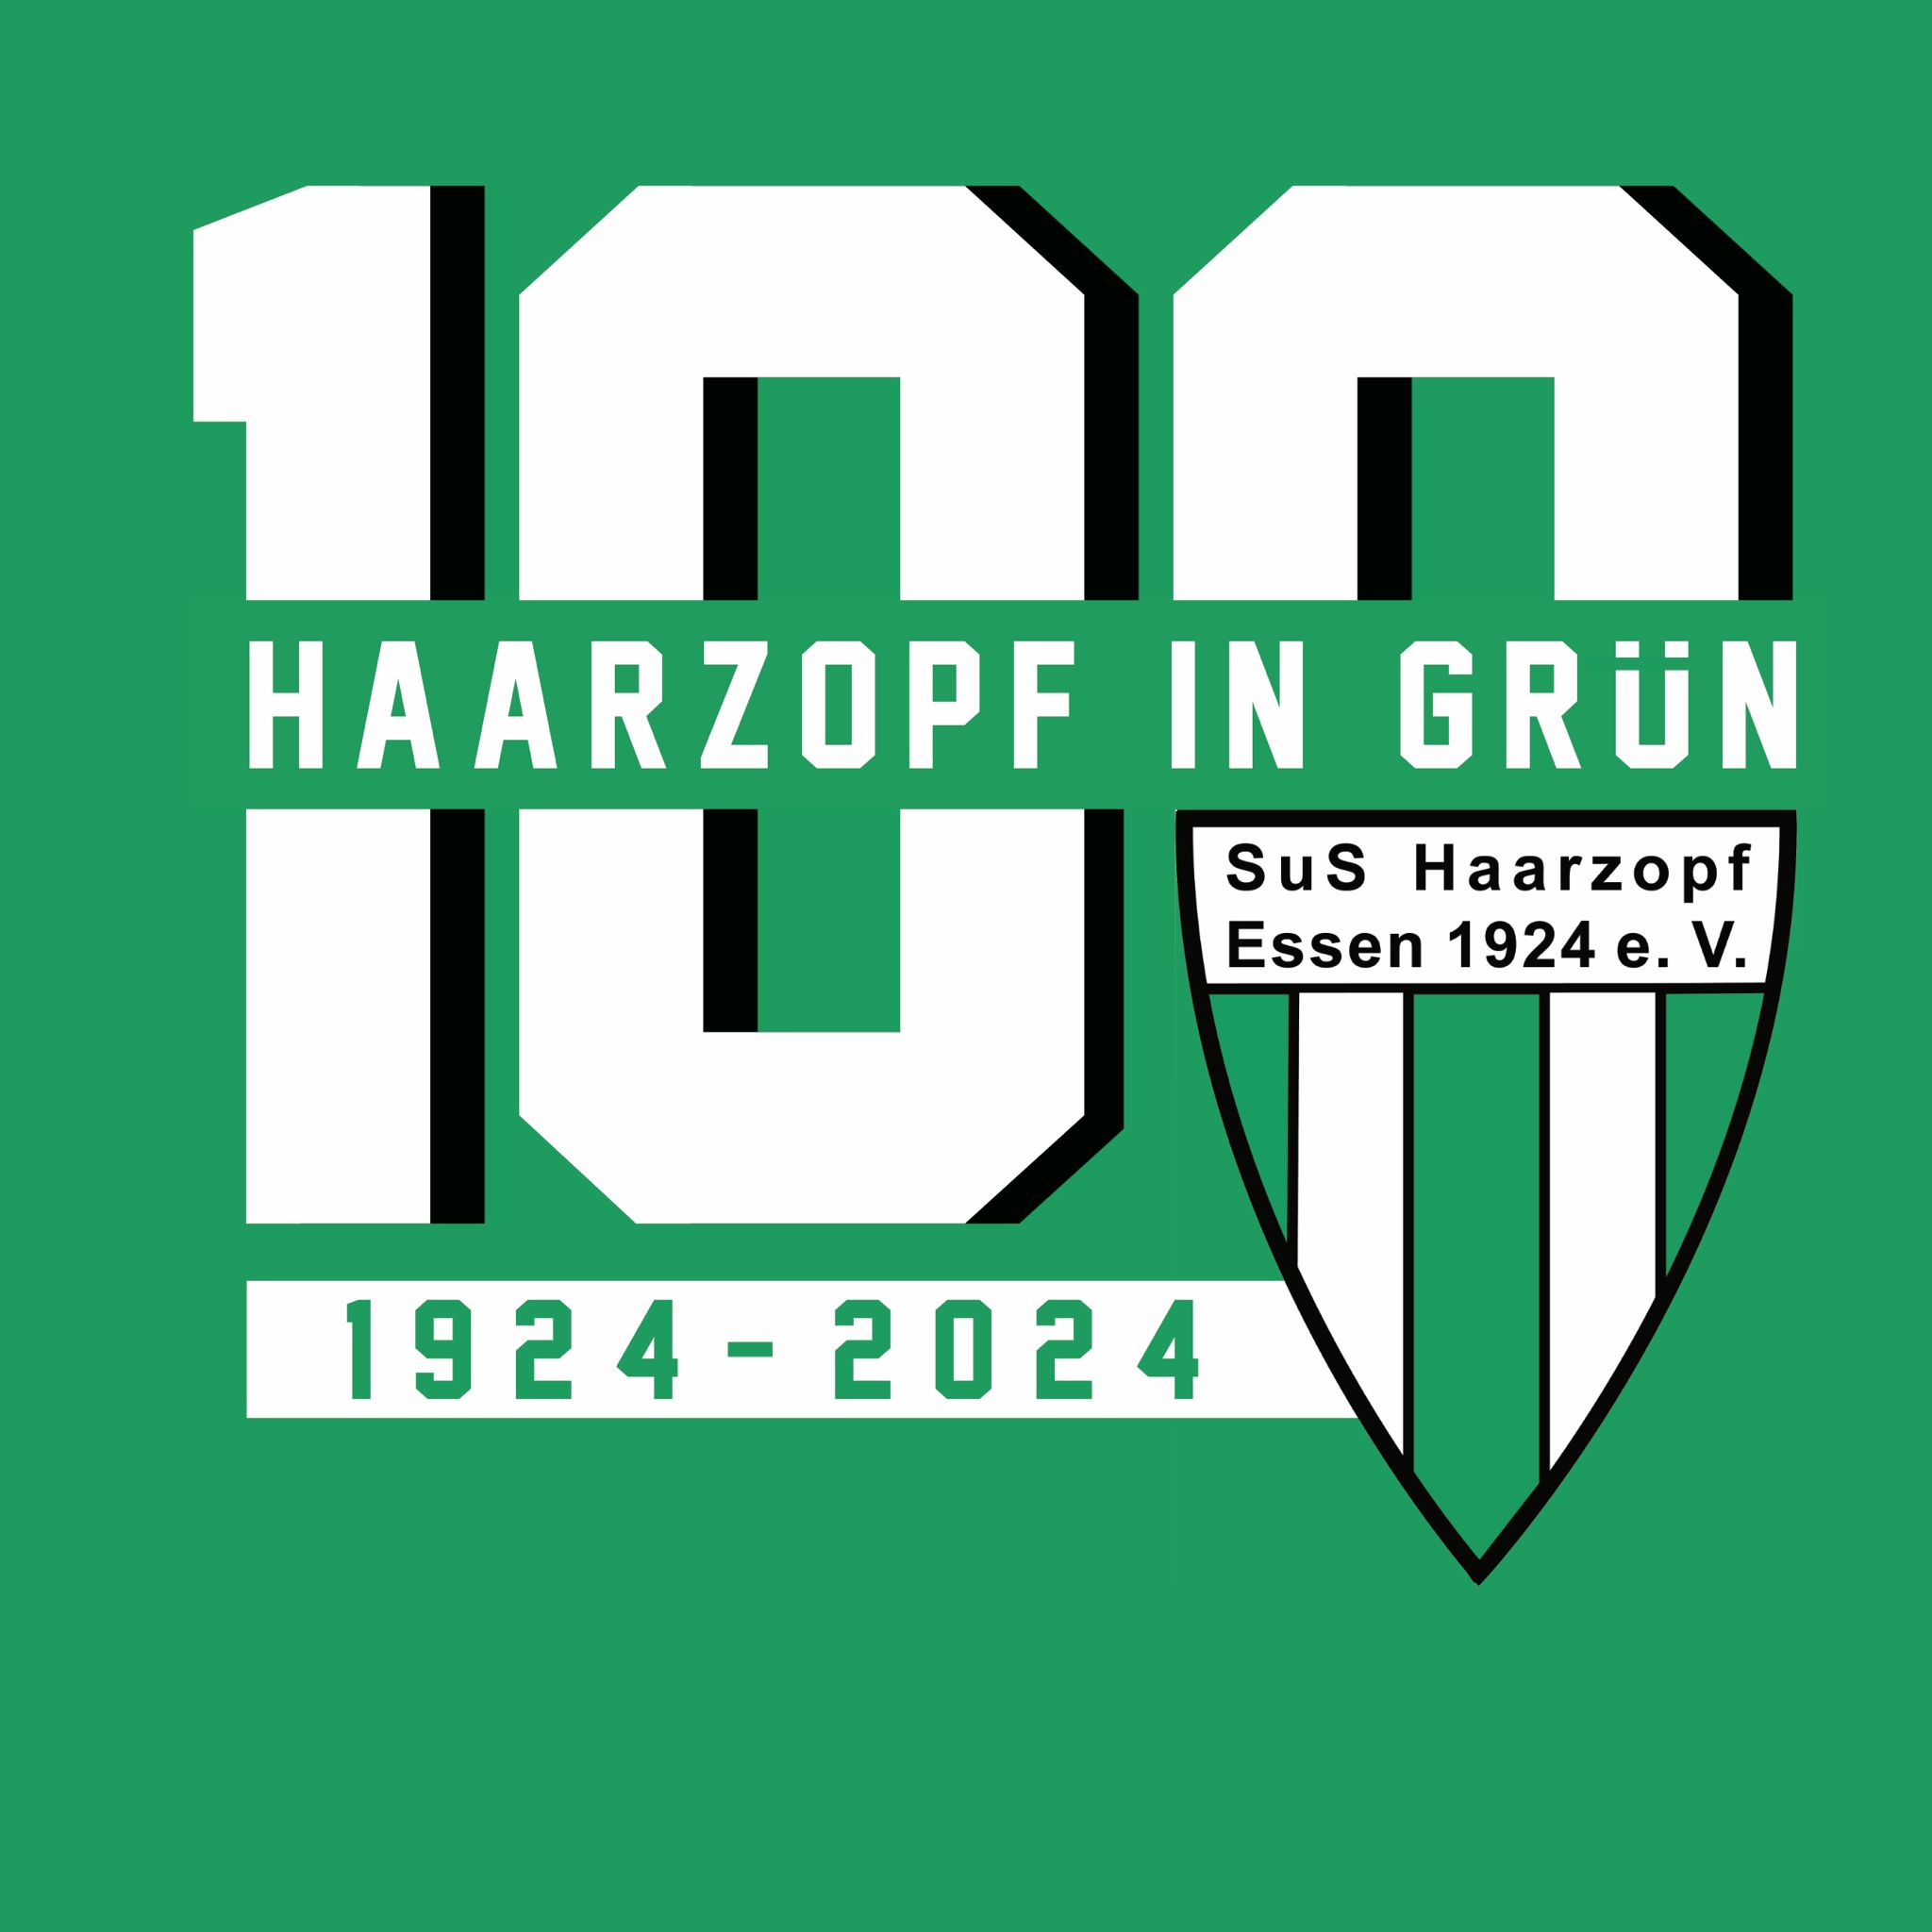 100 Jahre SuS Haarzopf 1924 e.V.